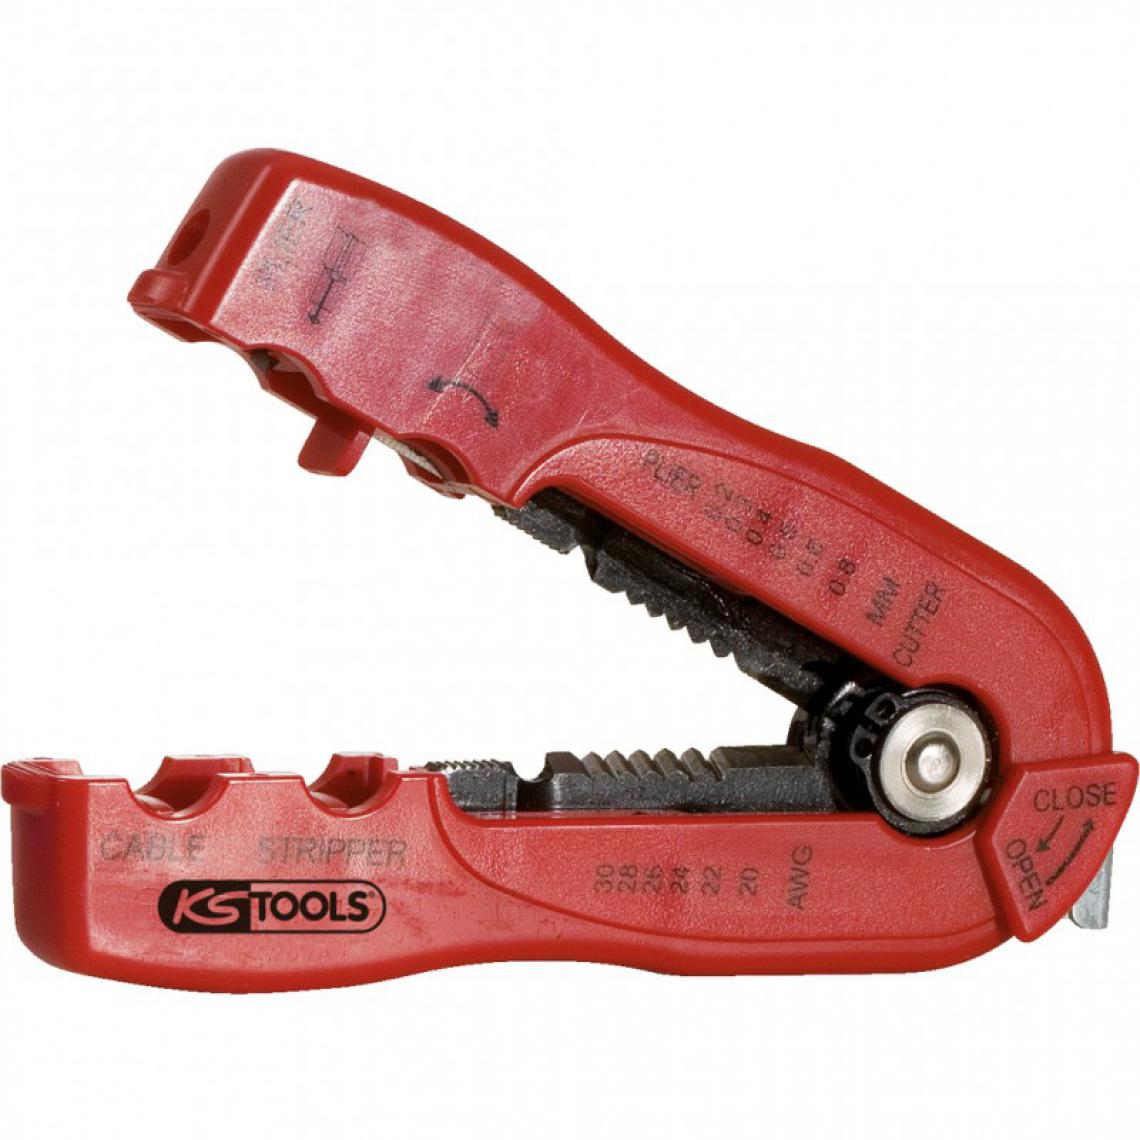 Ks Tools - KS TOOLS 115.1251 Pince à dénuder multifonction, Ø0,2 - 0,8 mm² - Presses et serre-joints